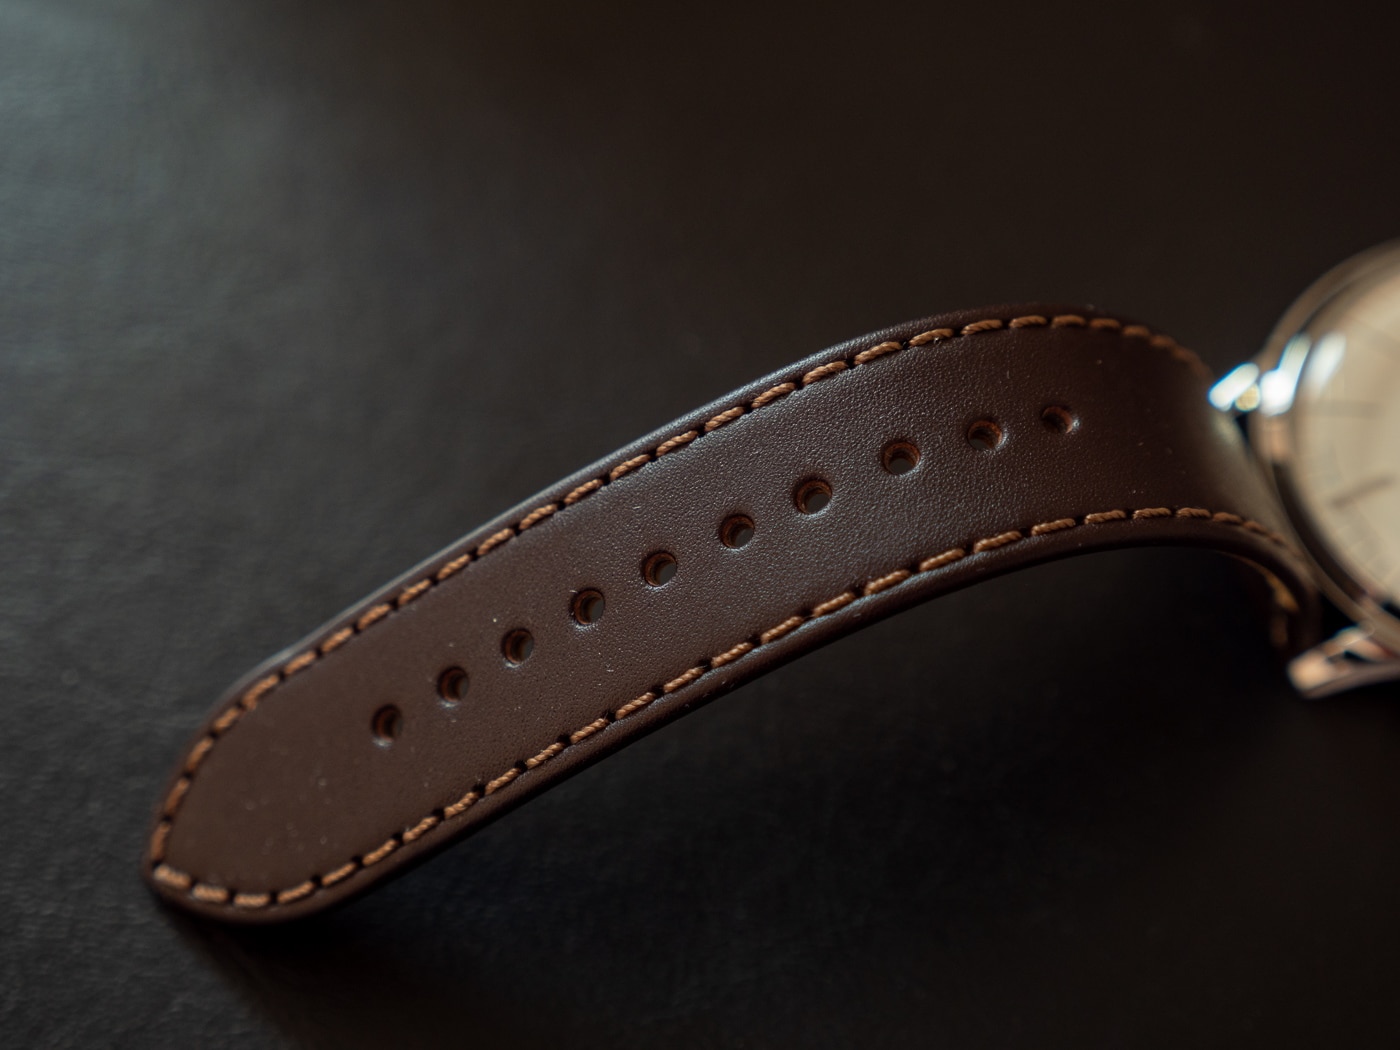 Orient Bambino v3 gen 2 leather strap